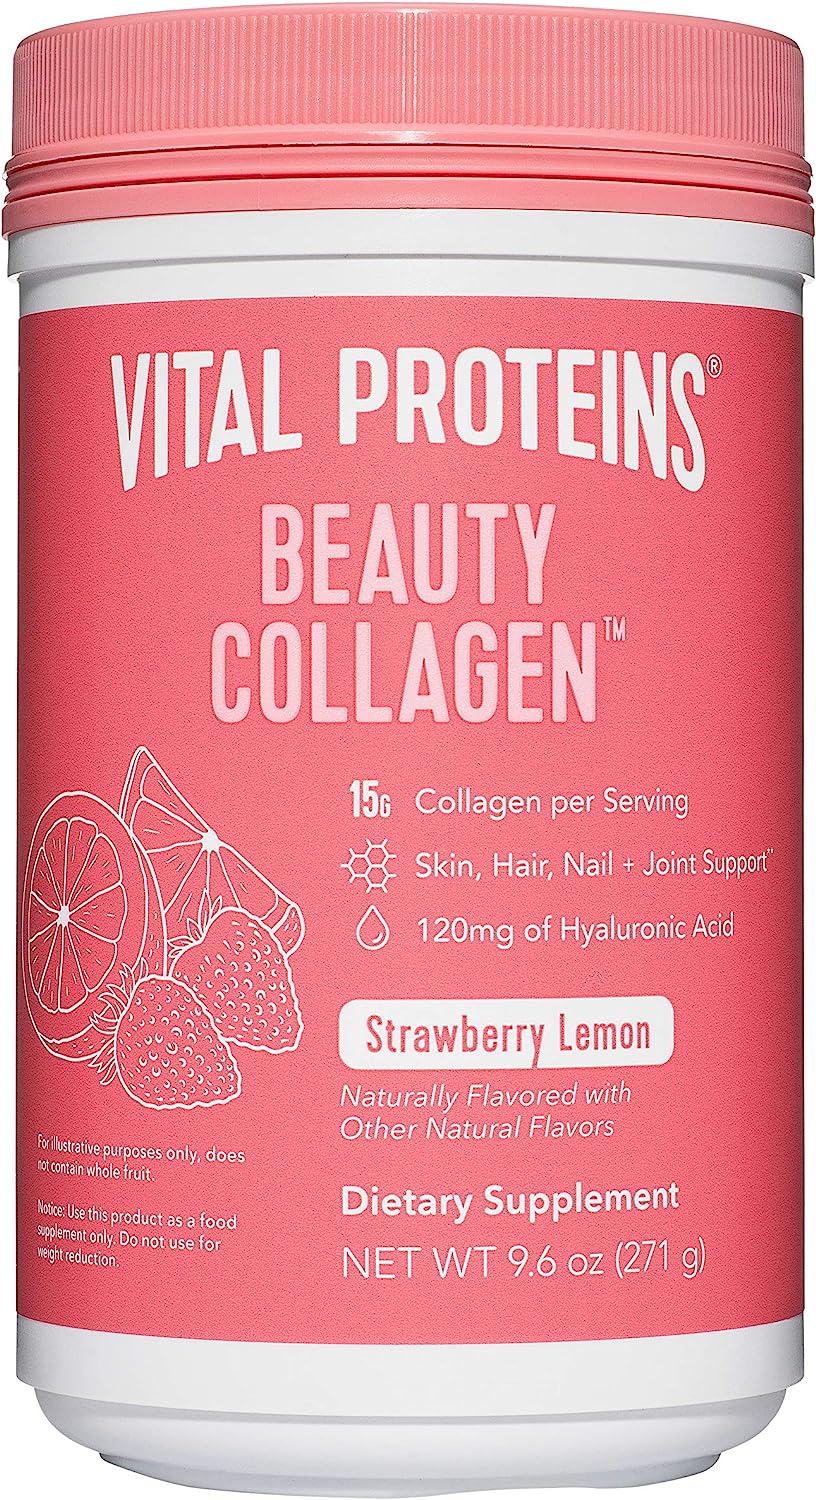 Vital Proteins, Beauty Collagen, Strawberry Lemon